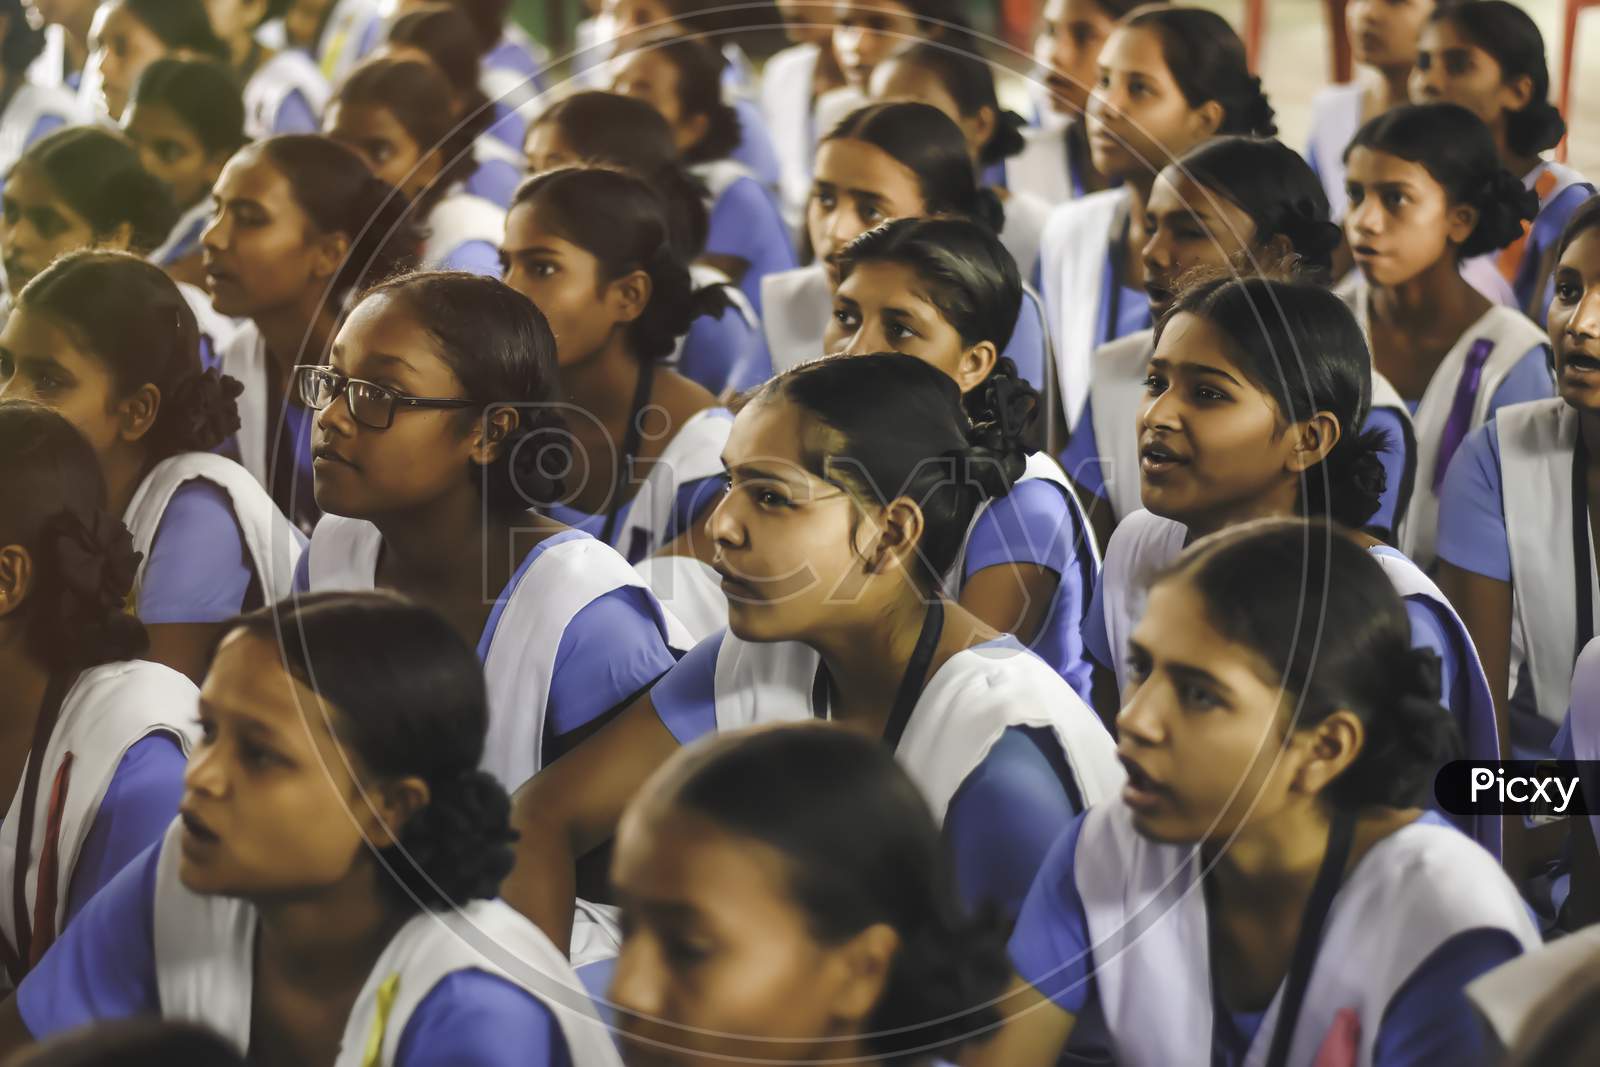 Indian school girl student in uniform. School students sitting on floor studying inside classroom.